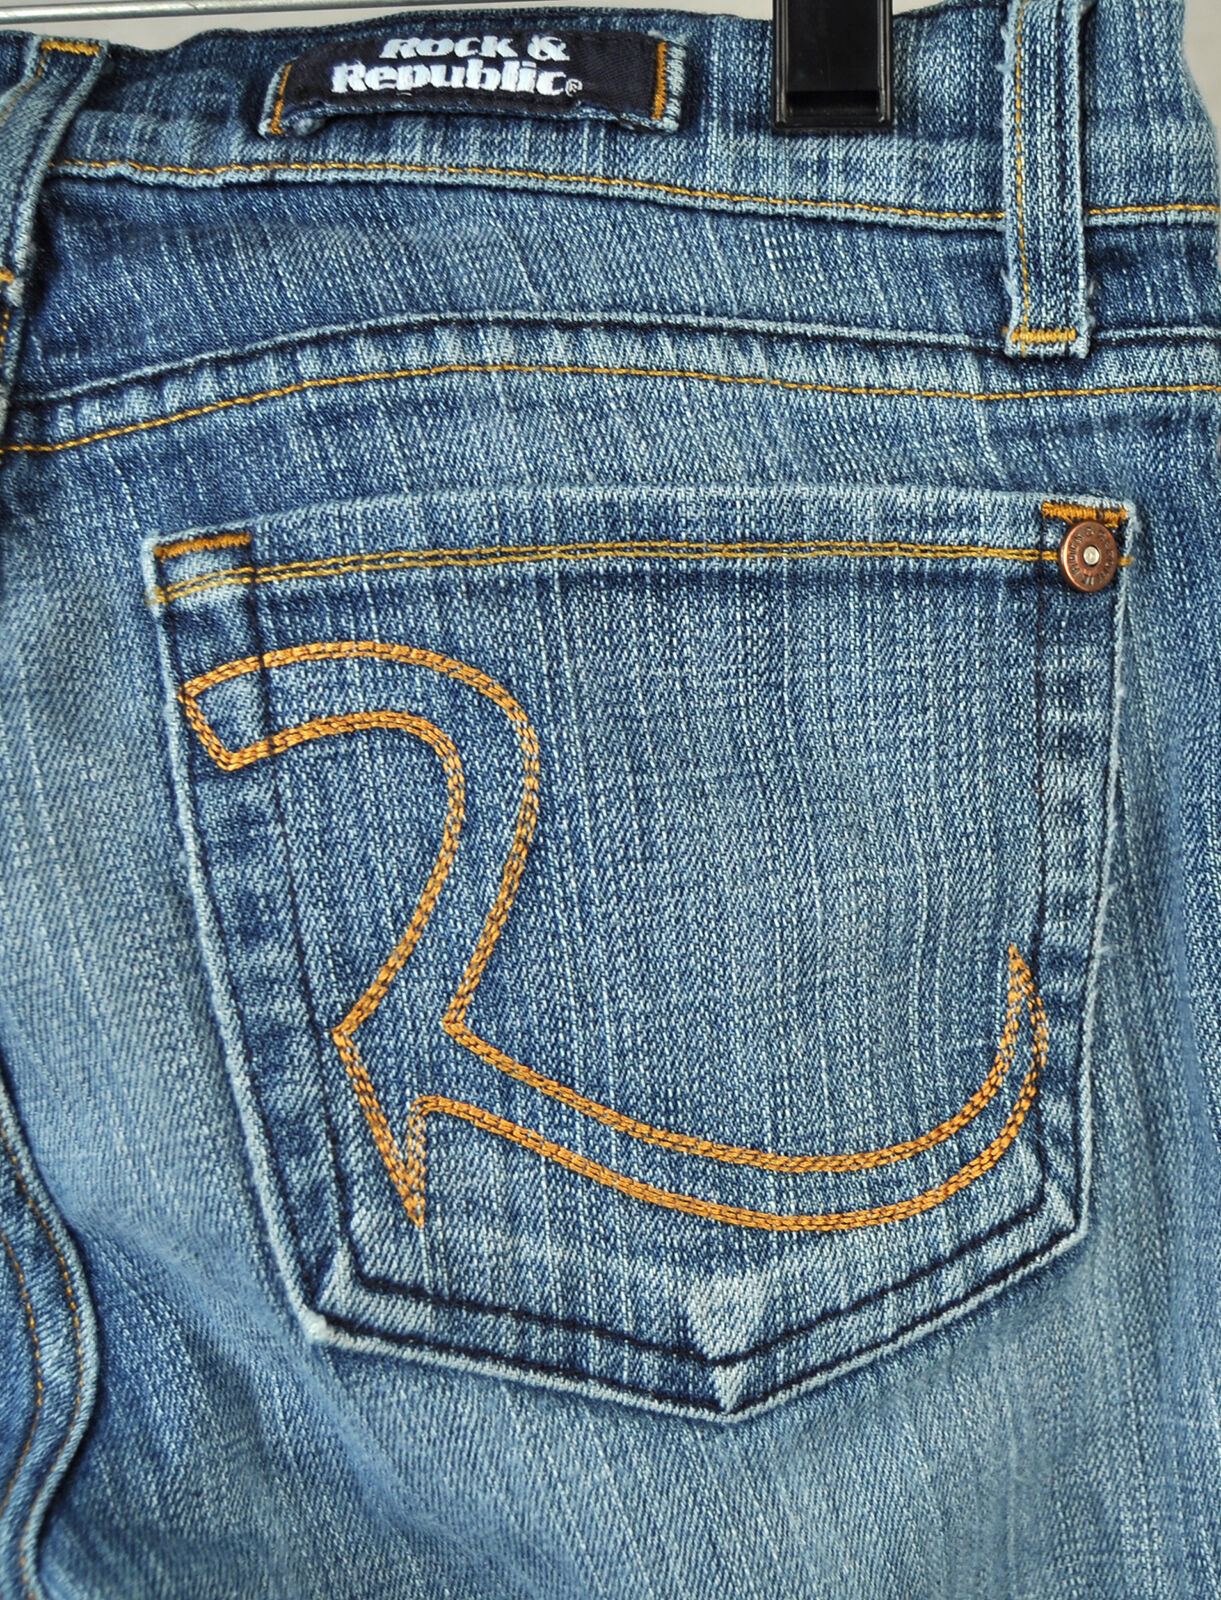 Rock & Republic Blue Jean Denim Shorts NWT$54-$60 Size 6 Plus Size 24W 